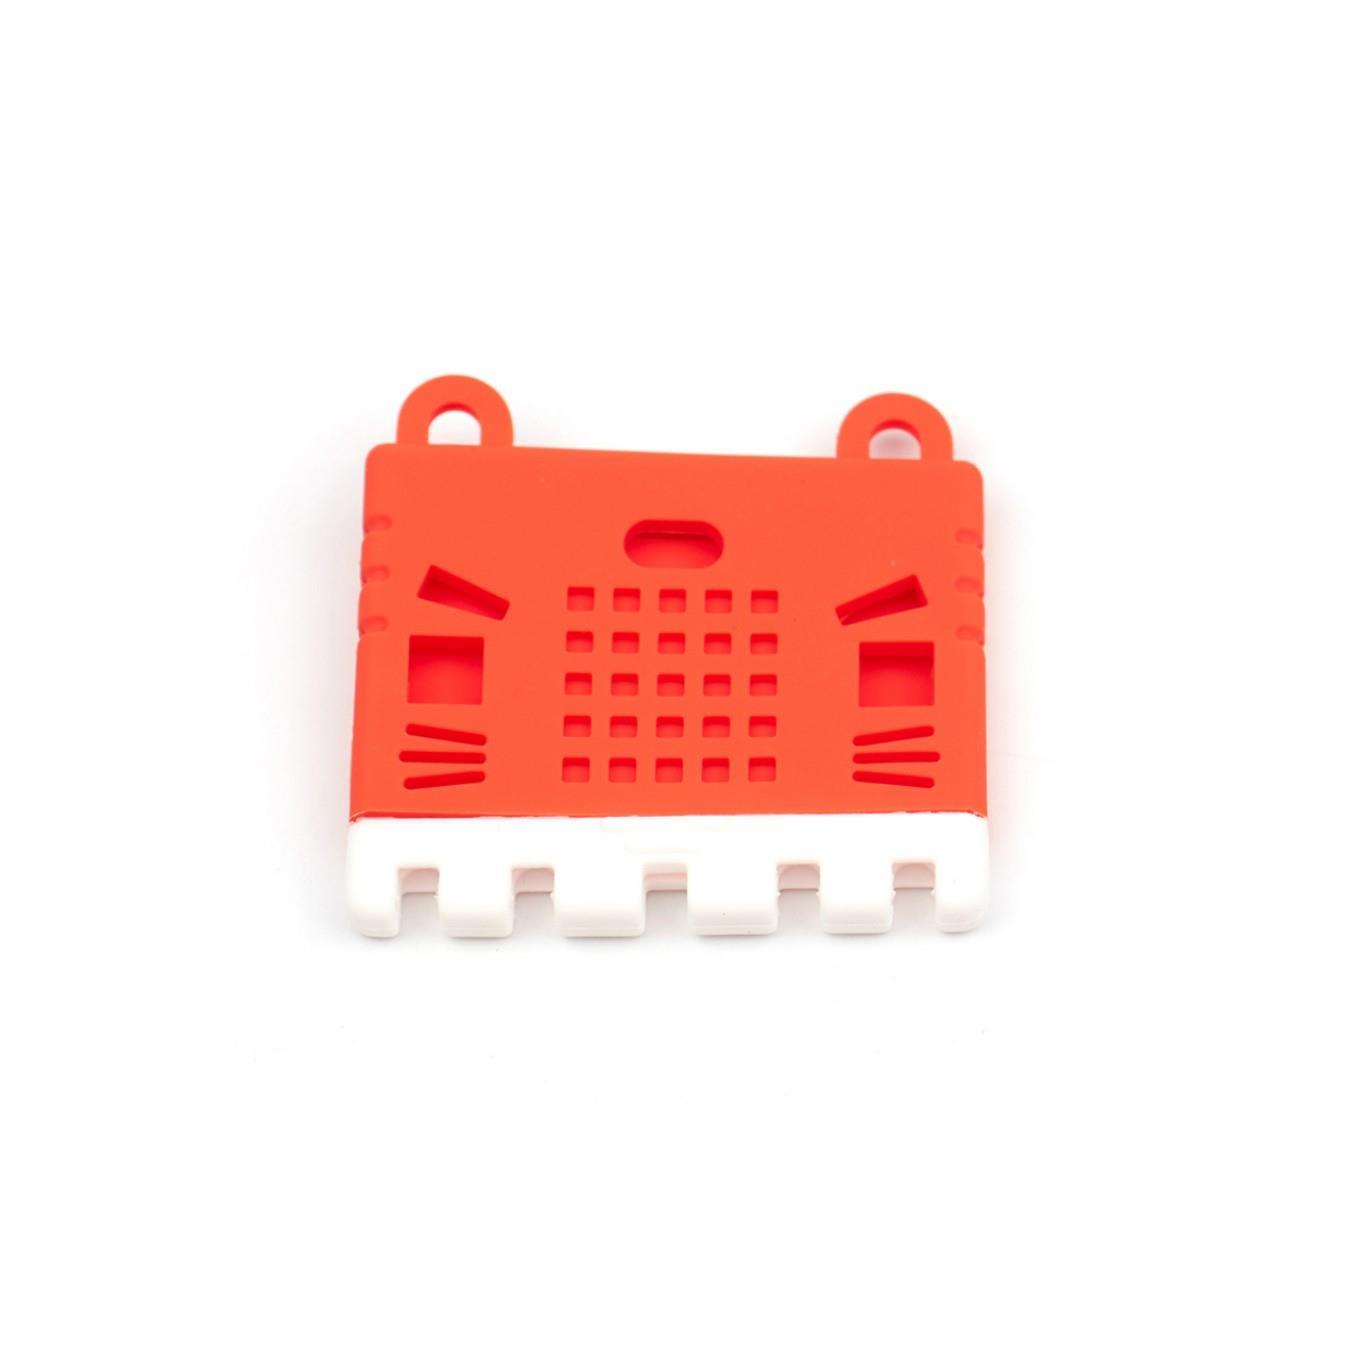 KittenBot Micro:bit Case Silikonhülle - Rot - Zum Vergrößern klicken